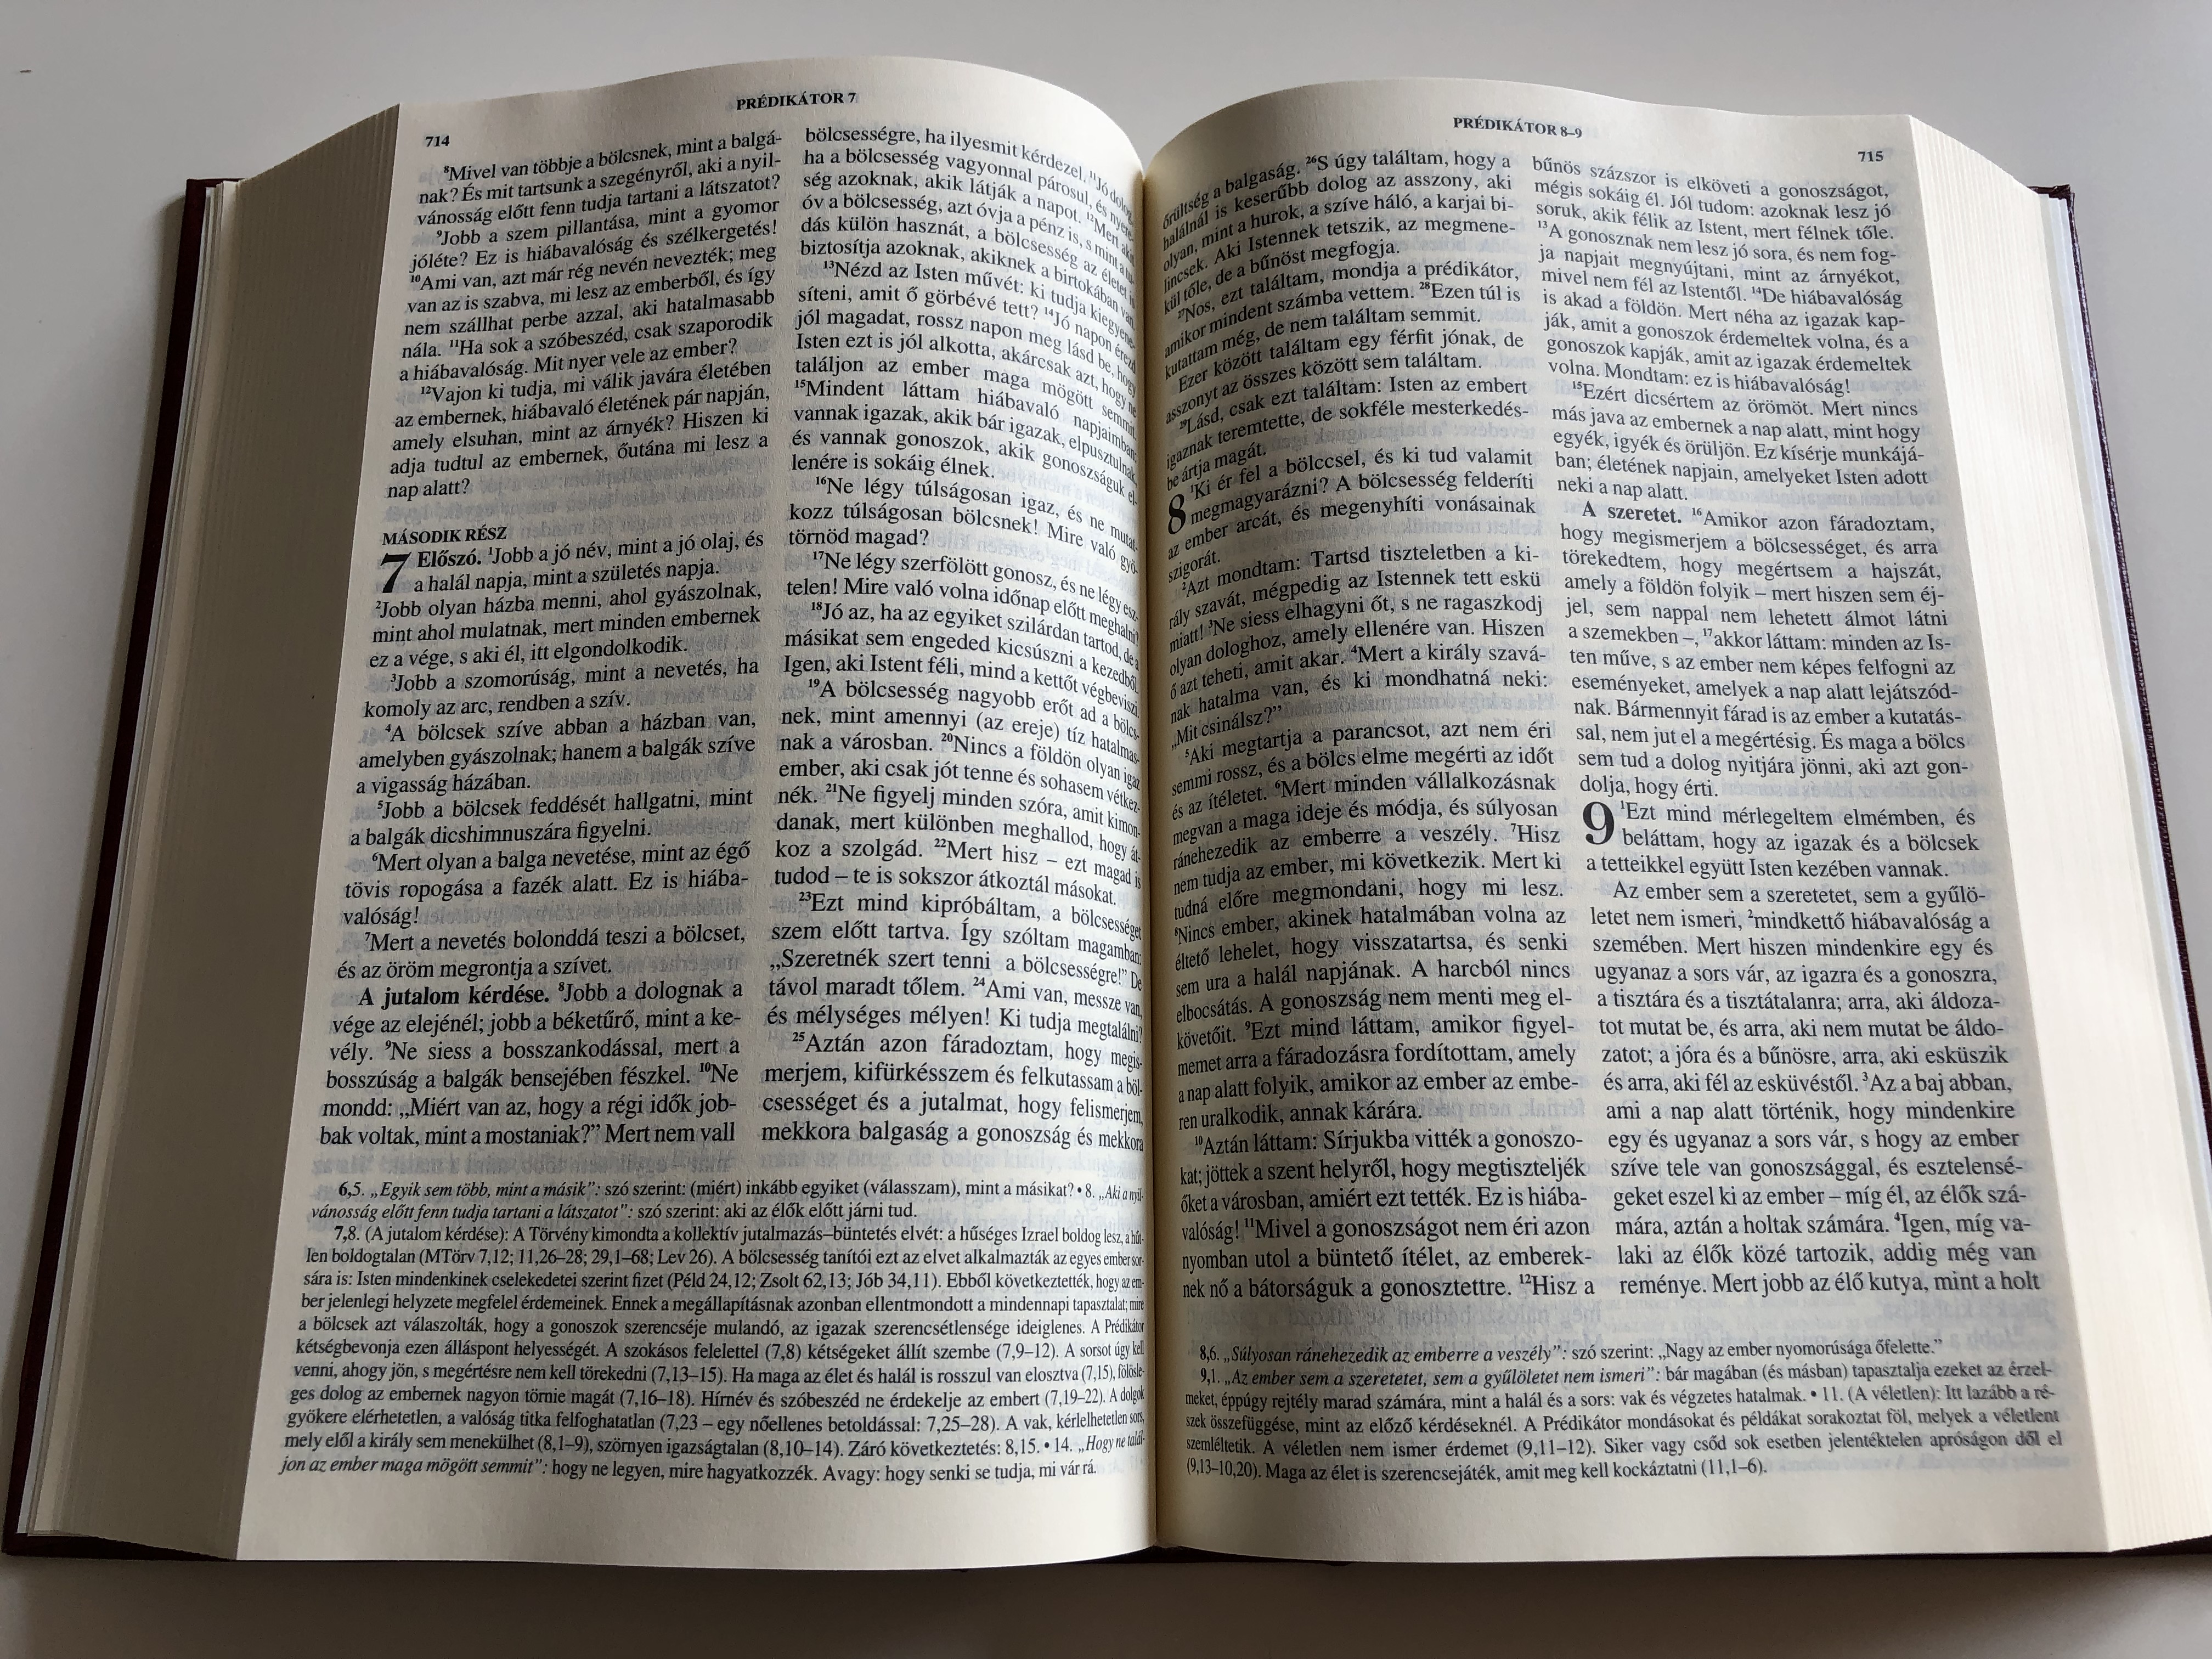 biblia-sz-vets-gi-s-jsz-vets-gi-szent-r-s-mid-size-hungarian-language-bible-catholic-version-g-l-gy-rki-kosztol-nyi-rosta-sz-n-si-tarj-nyi-ford-t-s-szent-istv-n-t-rsulat-8th-edition-burgundy-hardcover-2018-9-.jpg